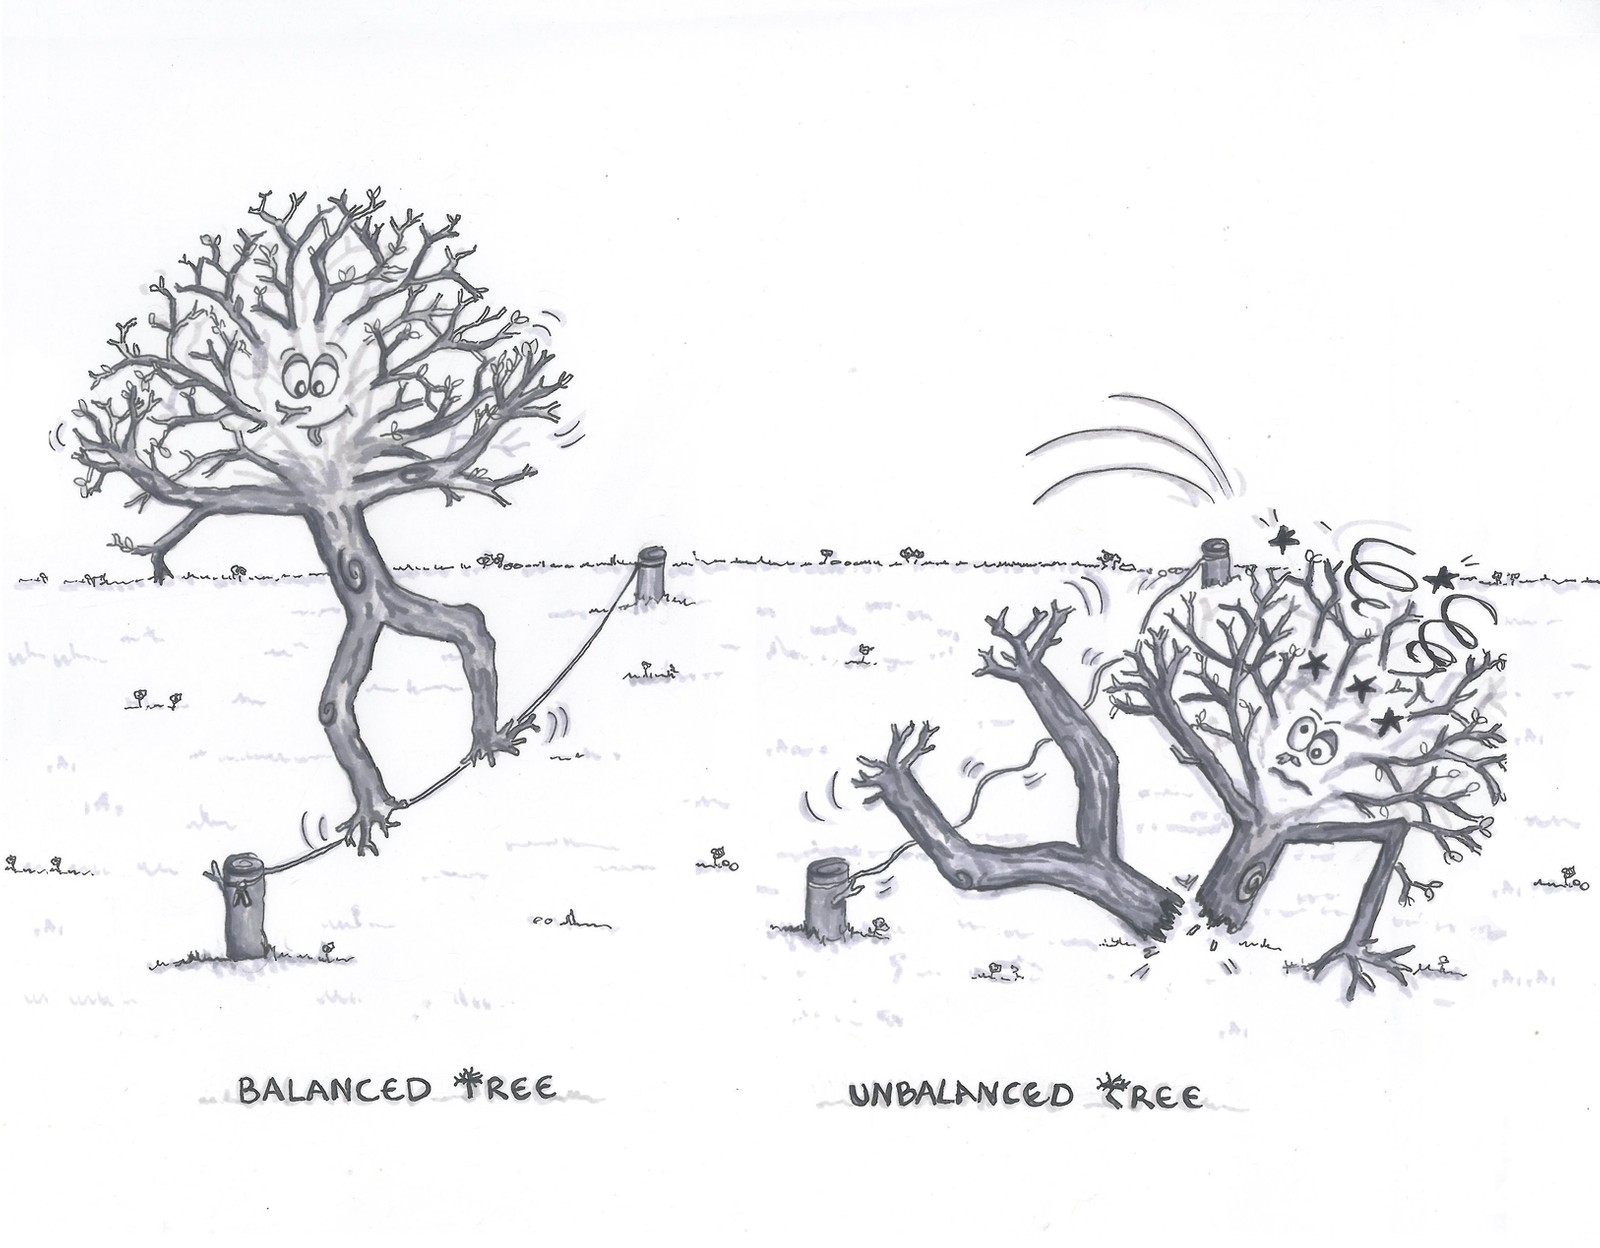 Balanced Tree vs Unbalanced Tree